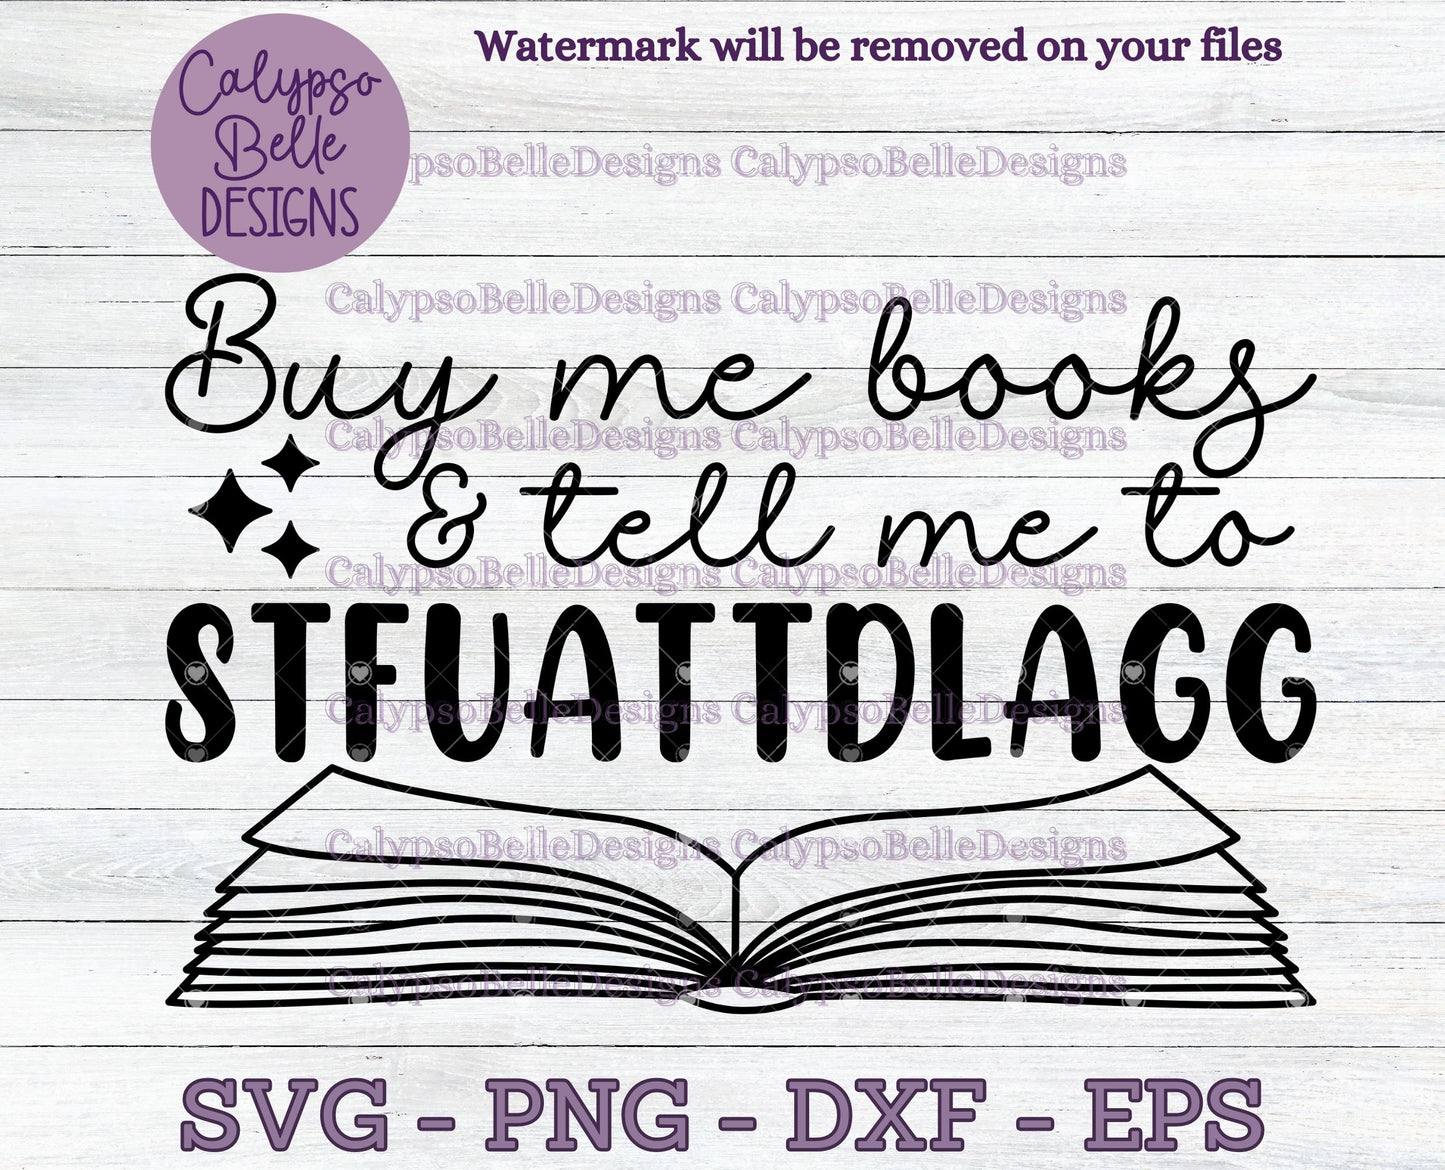 Buy me Books & Tell Me to STFUATTDLAGG Design